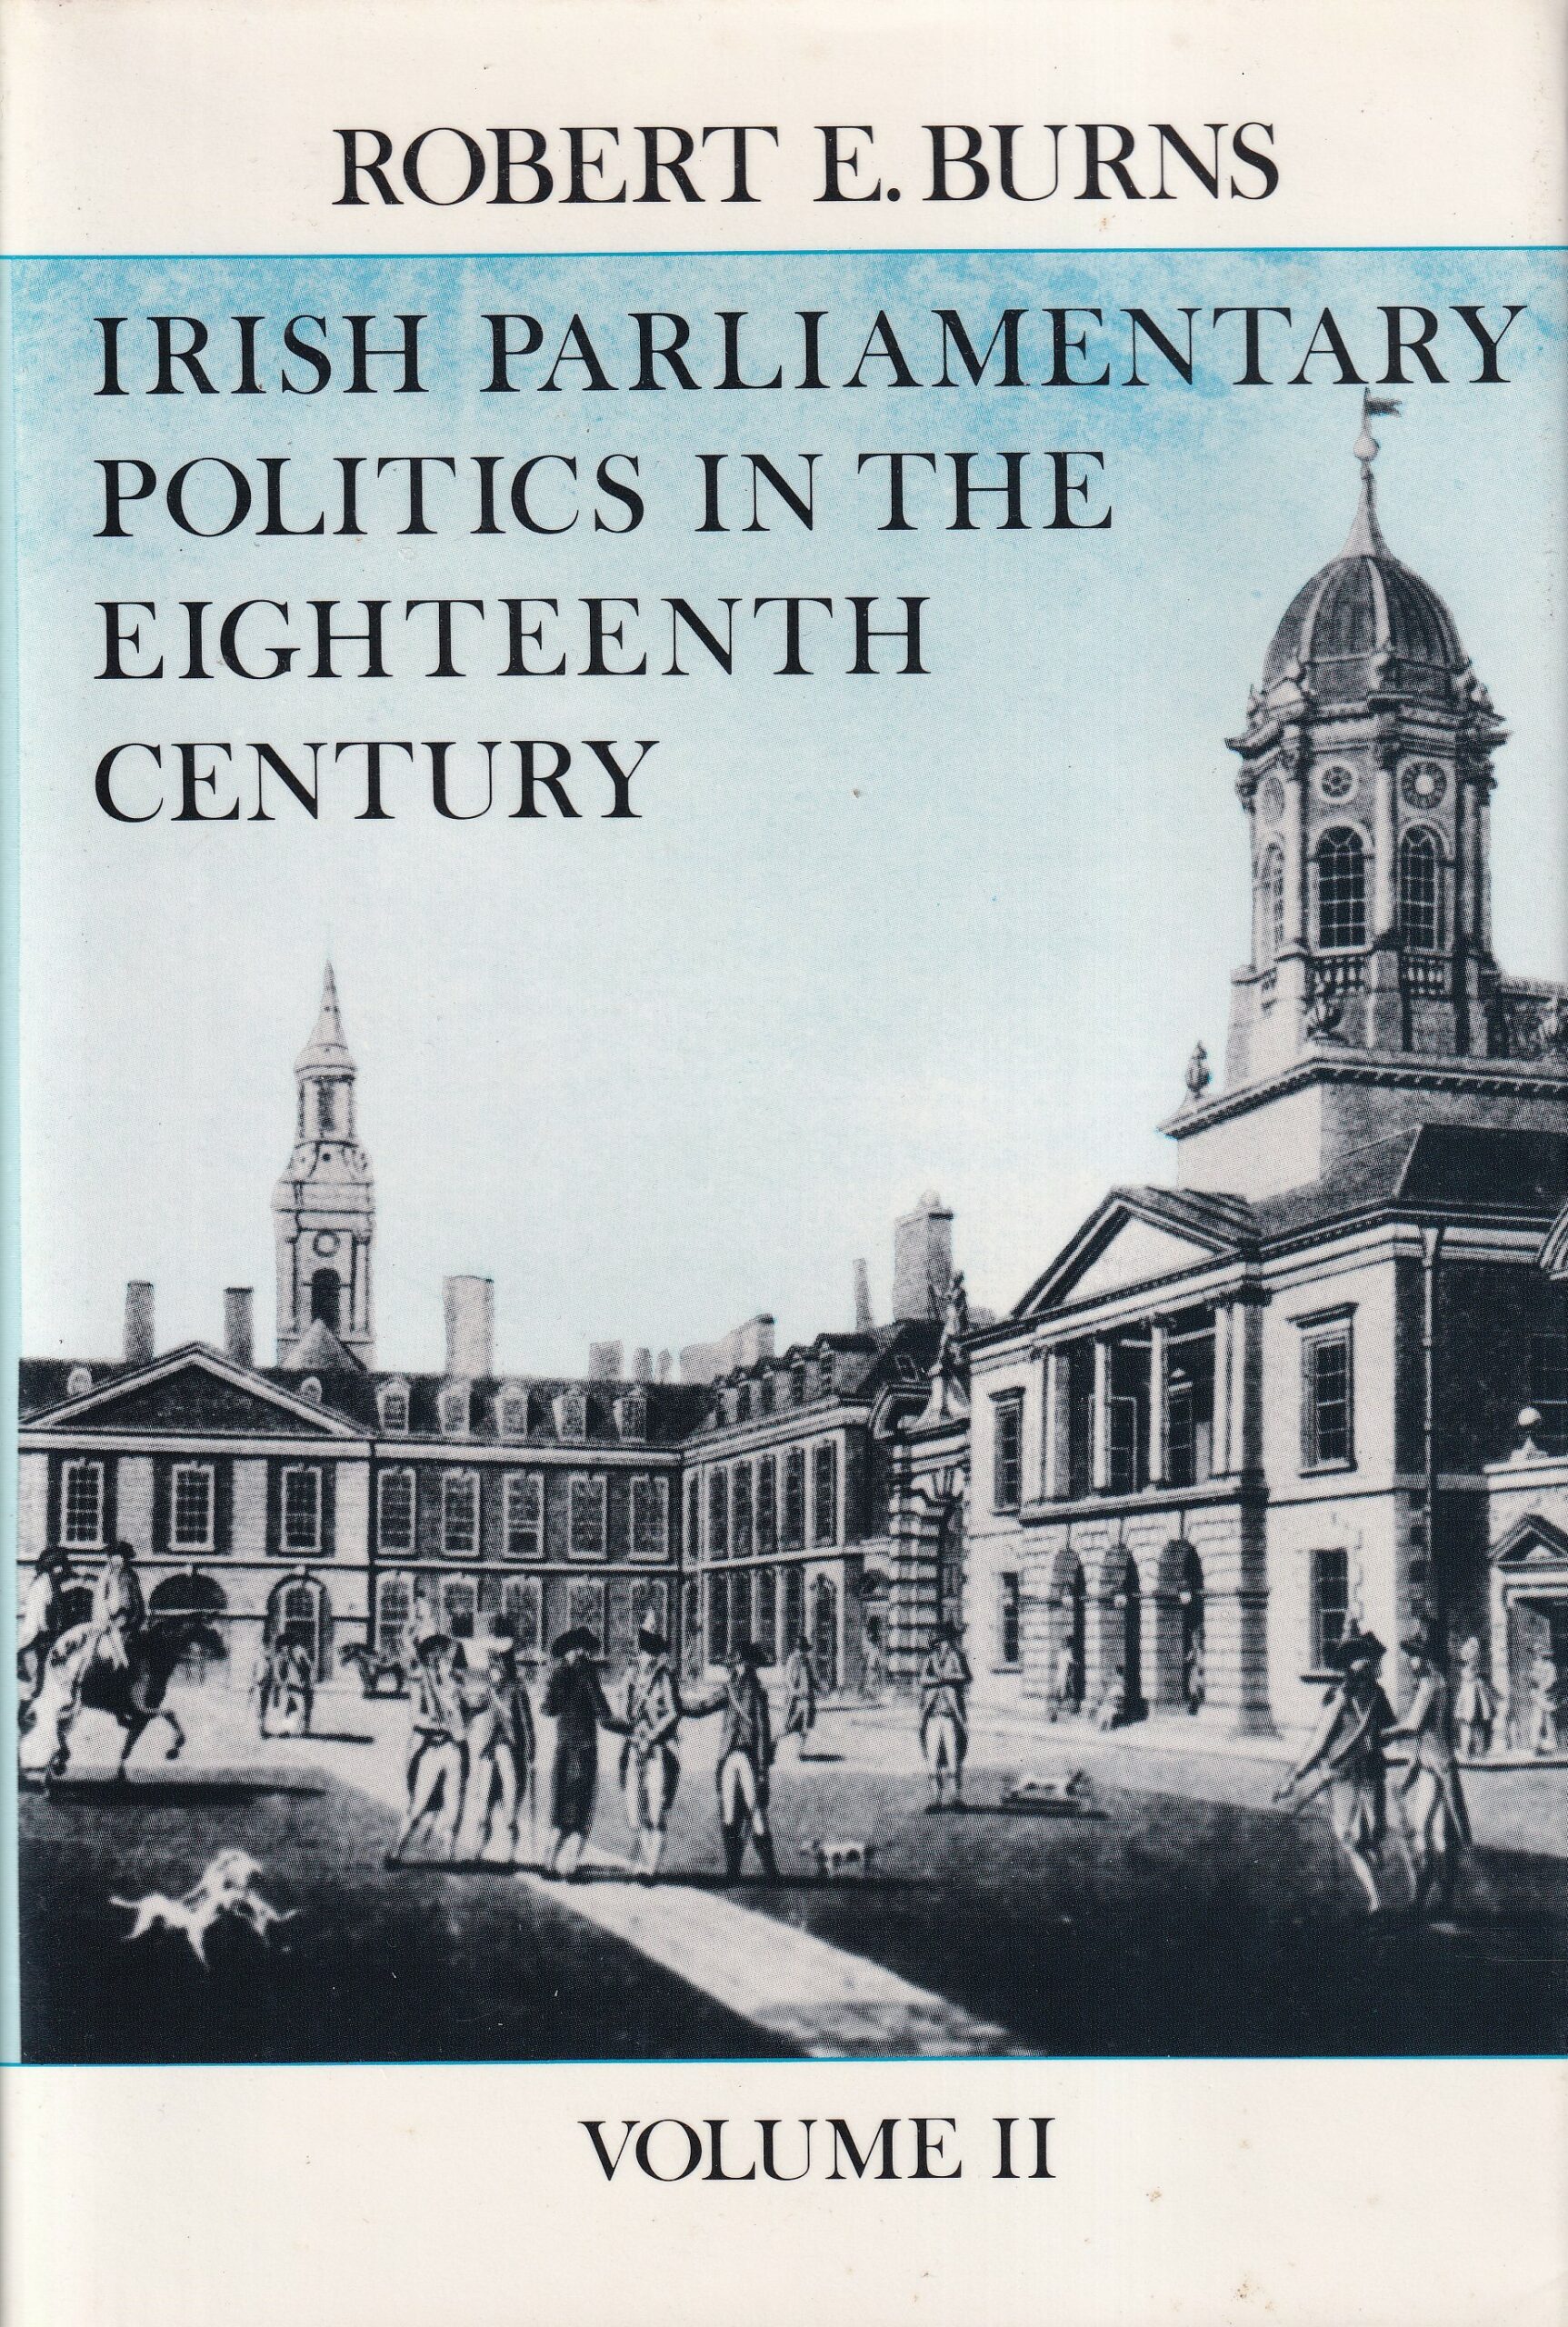 Irish Parliamentary Politics in the Eighteenth Century Vol ll | Robert E. Burns | Charlie Byrne's